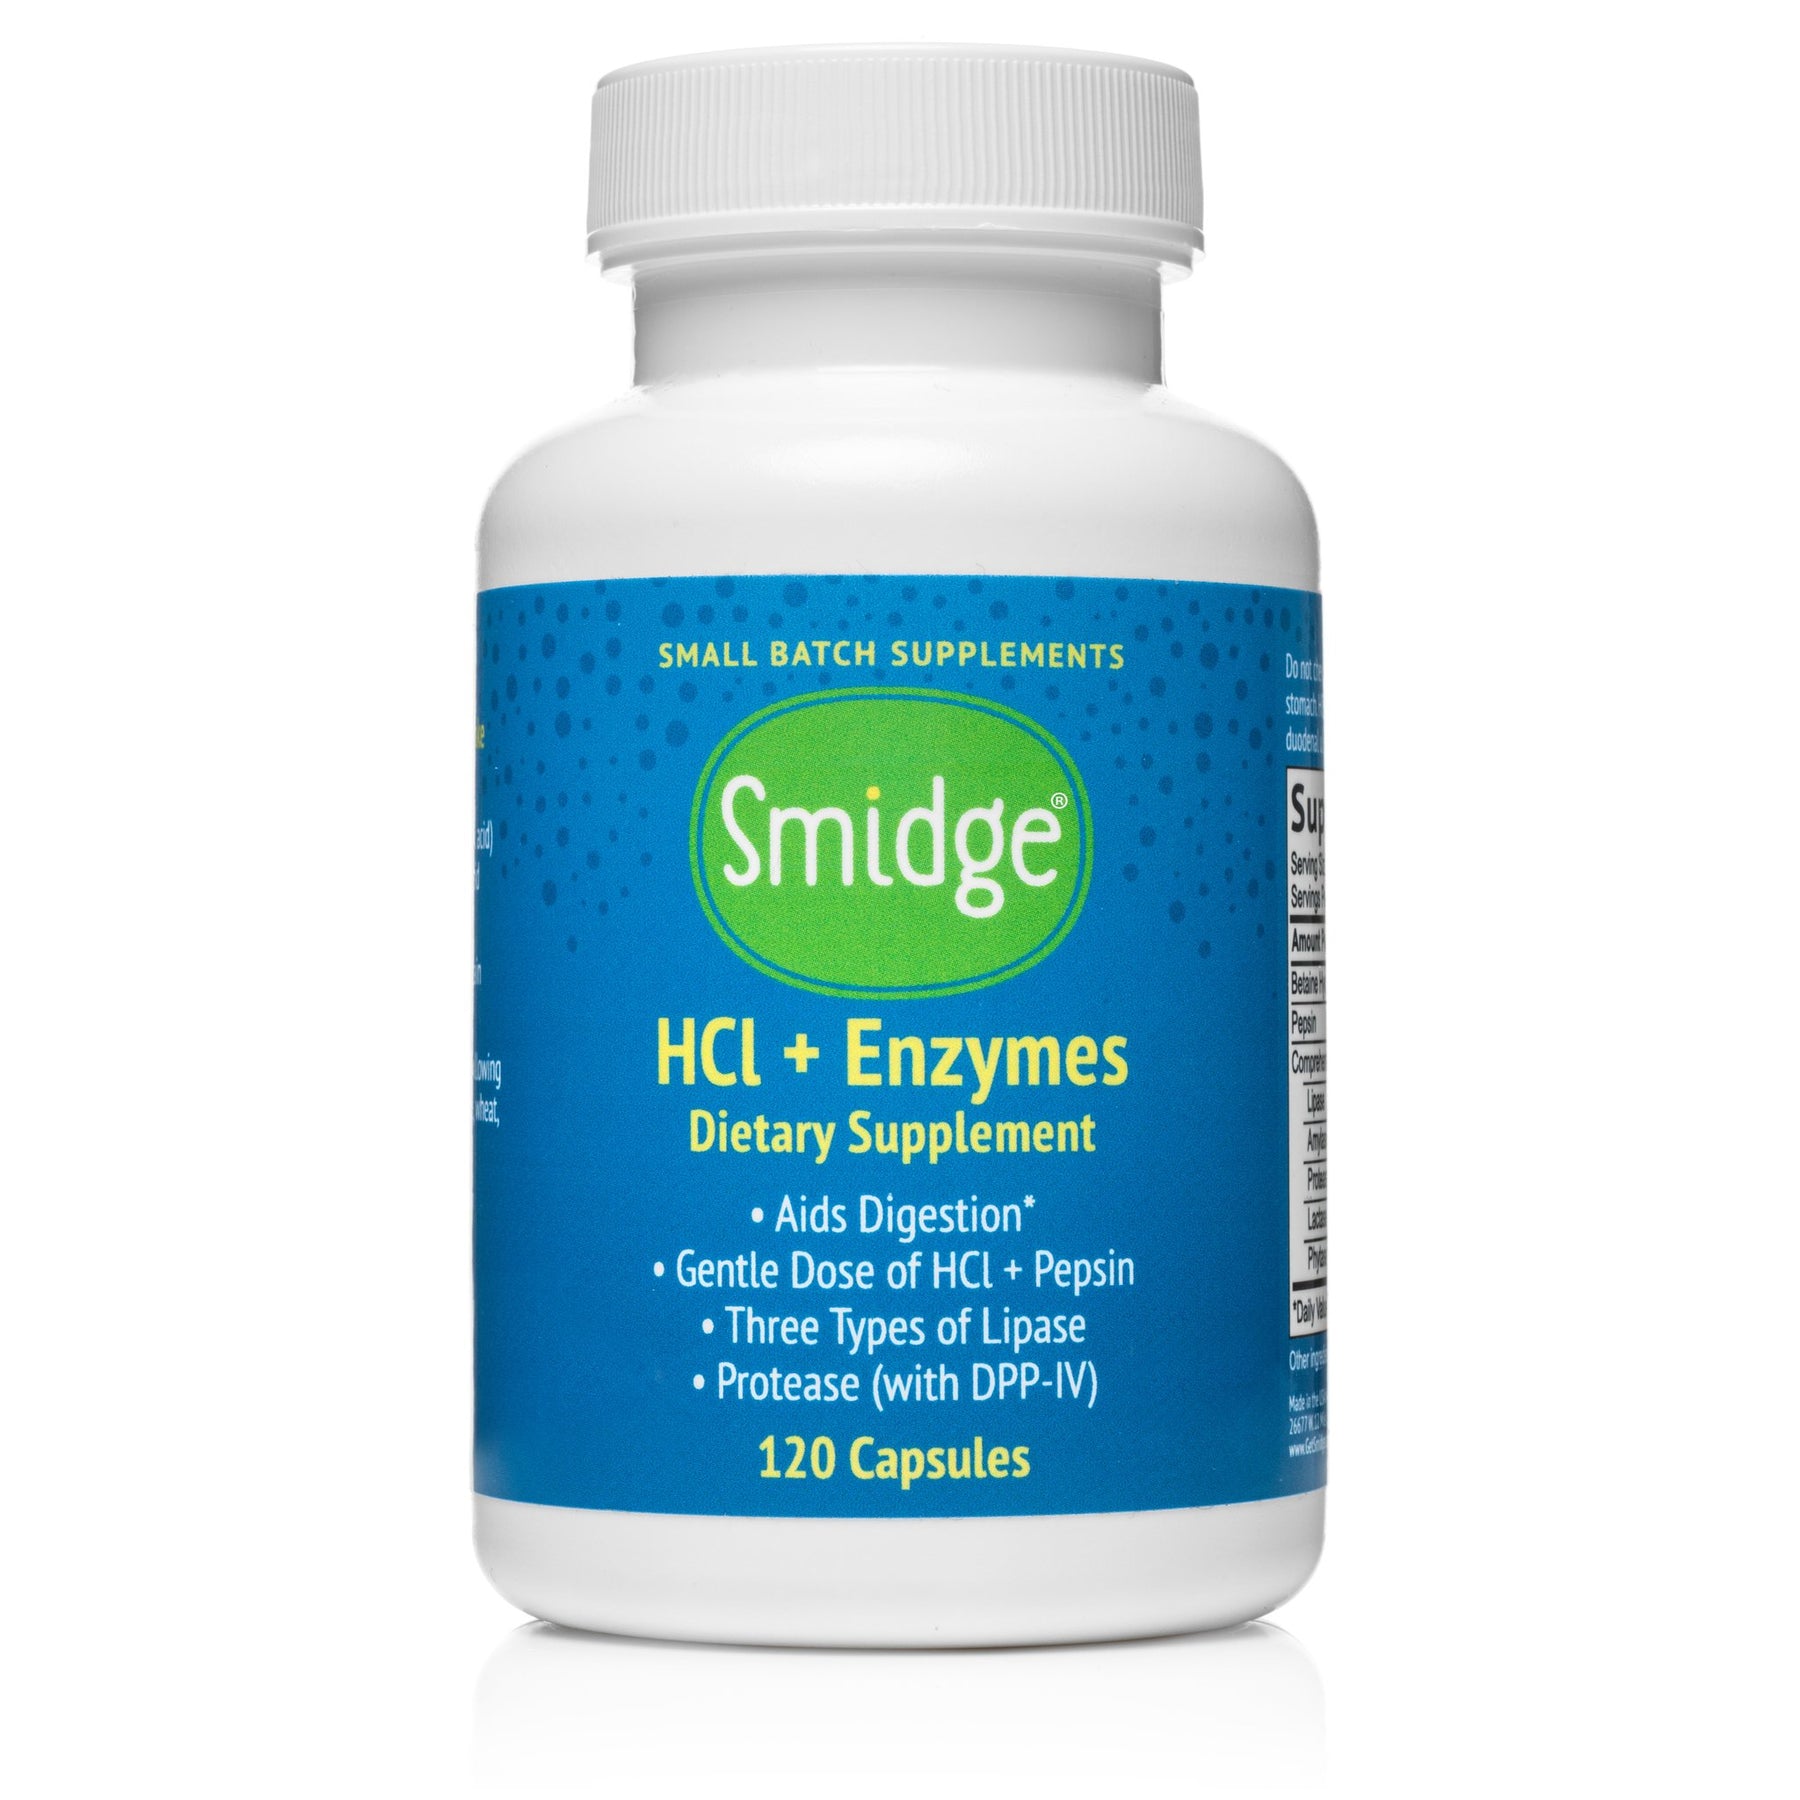 Smidge HCL + Enzymes